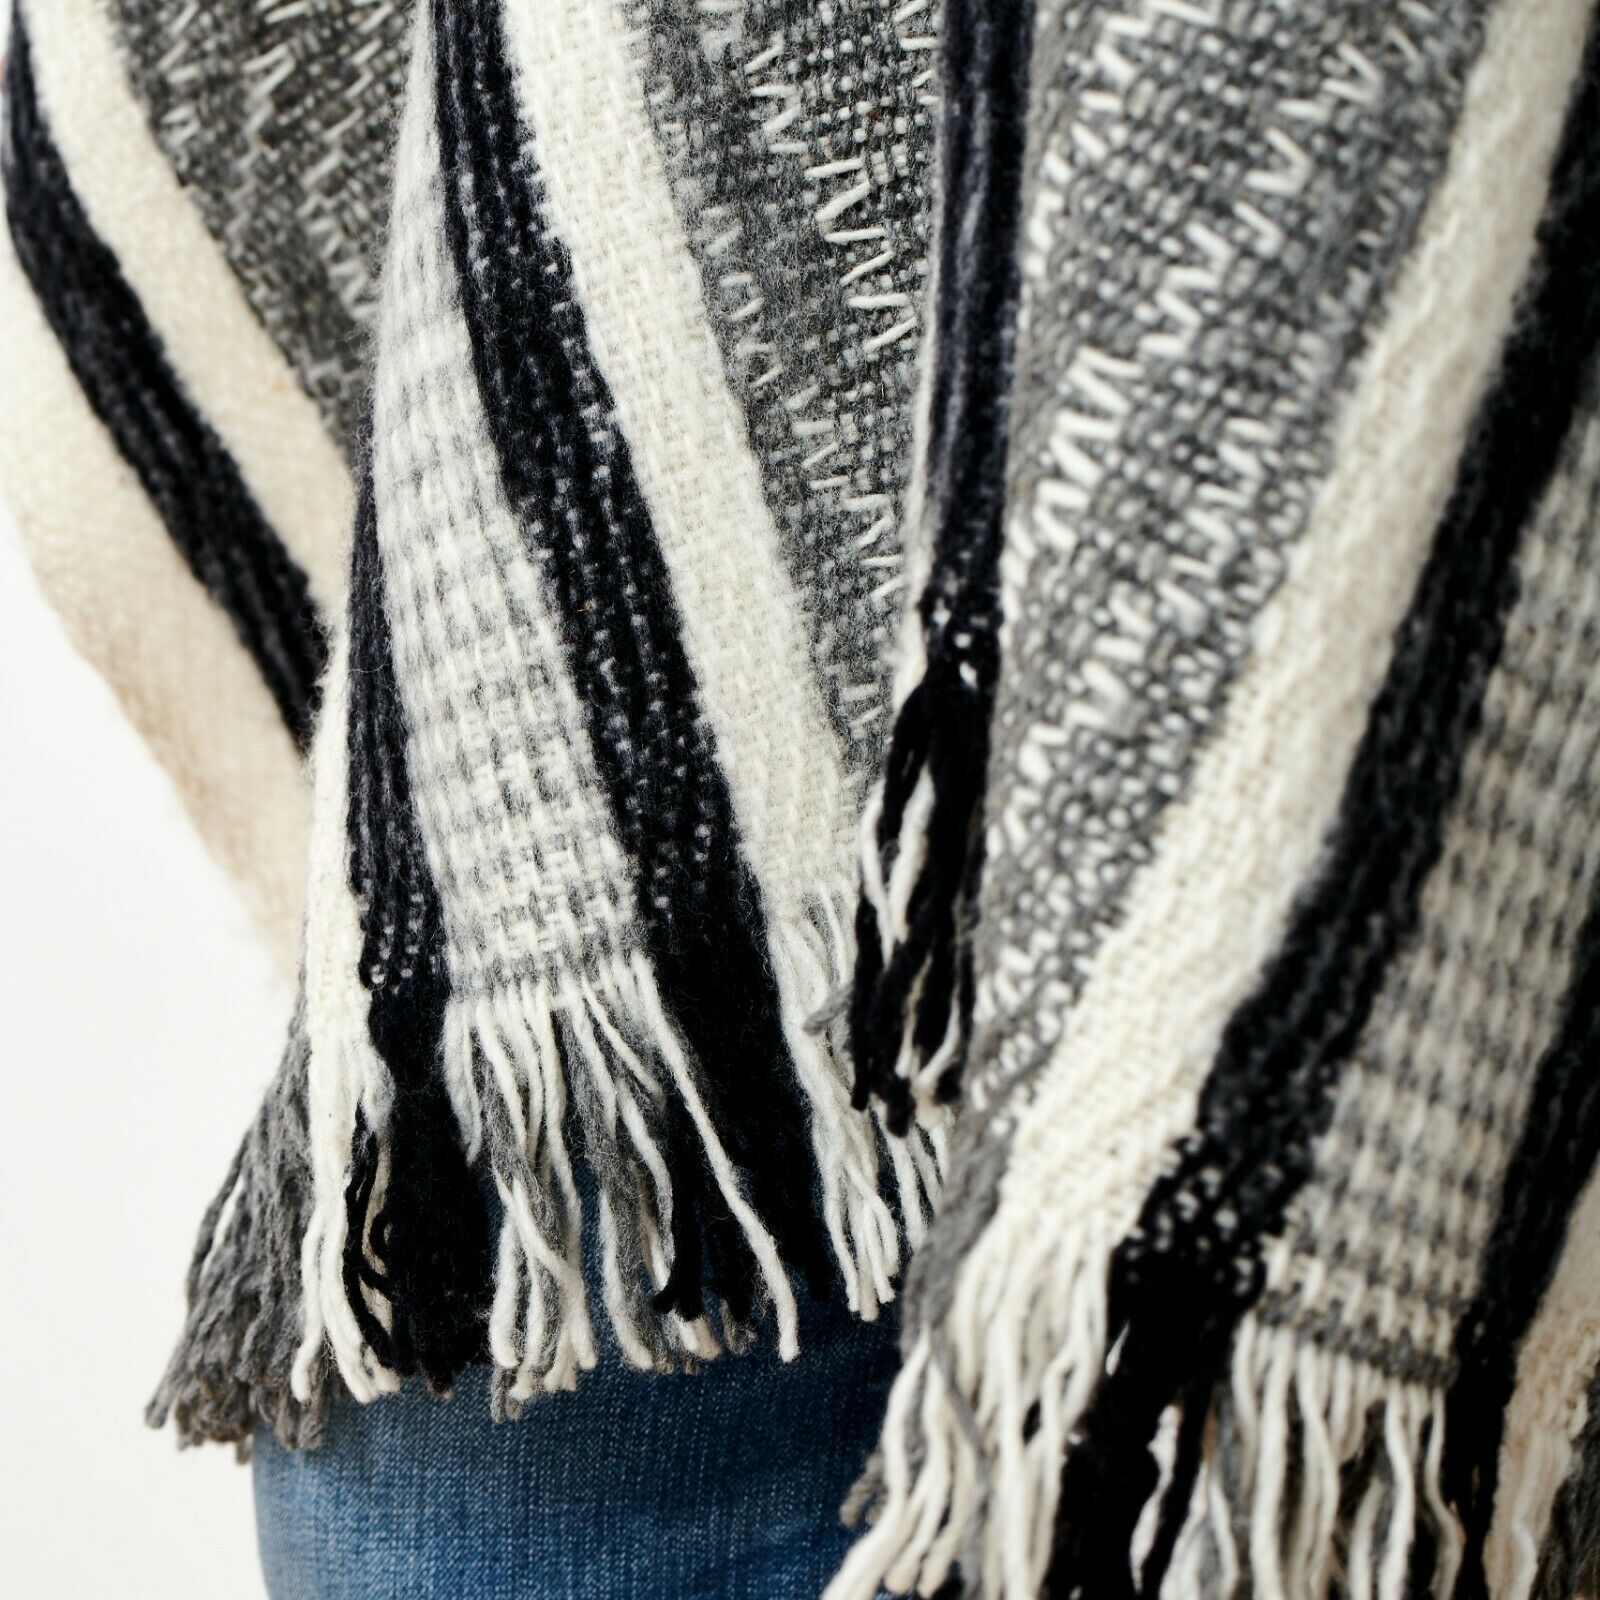 Llama Wool Unisex South American Handwoven Hooded Poncho - wavy striped pattern